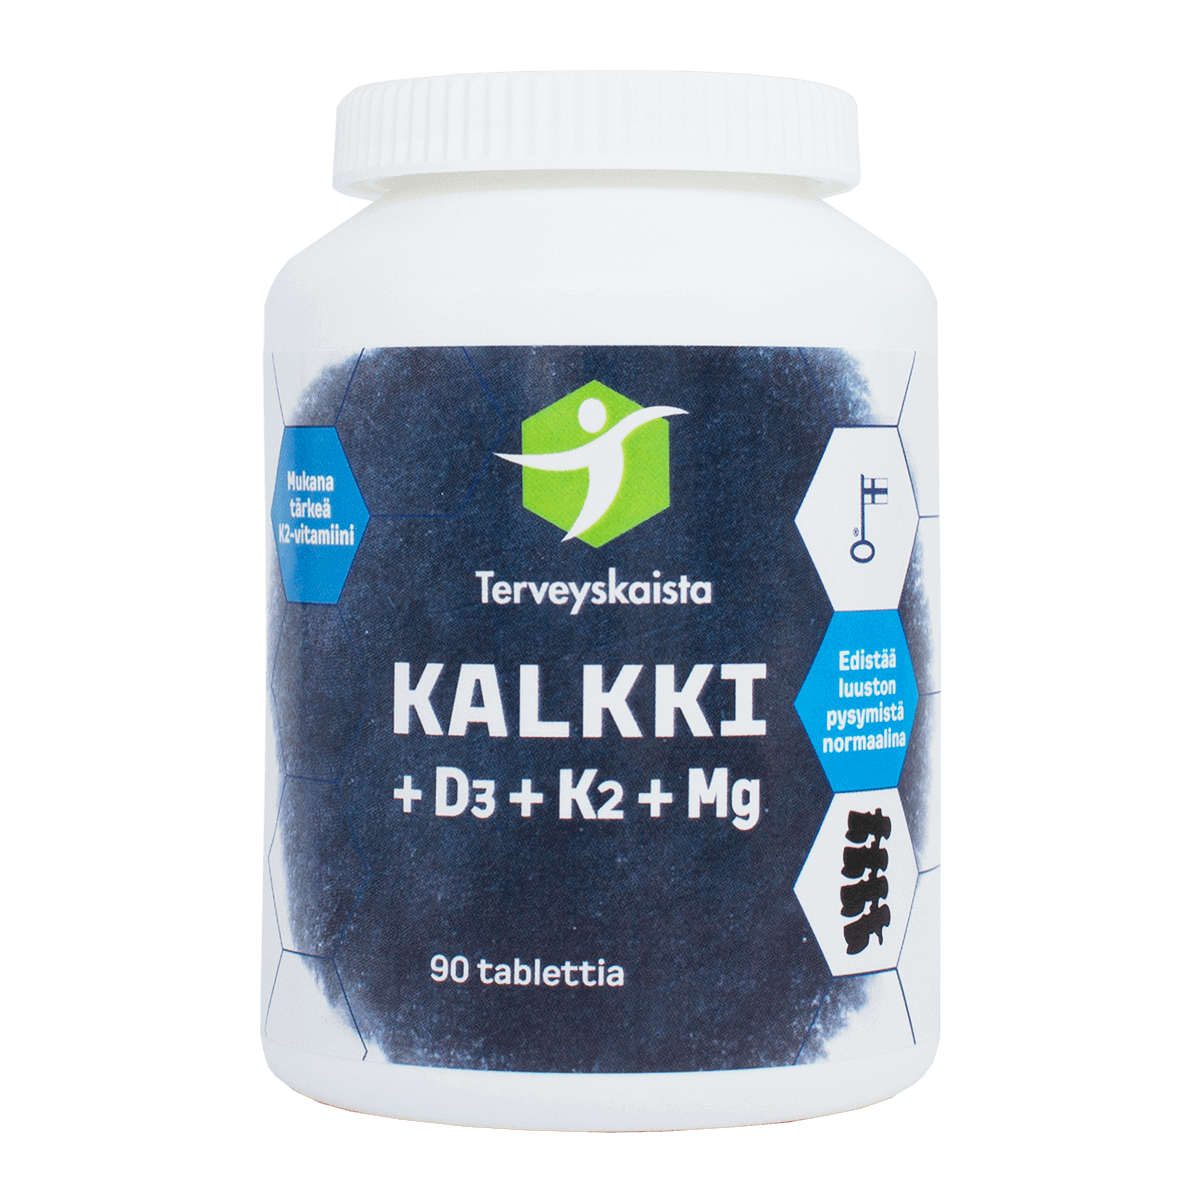 TERVEYSKAISTAN Kalkki + D3 + K2 + Mg tabletti 90 tabl